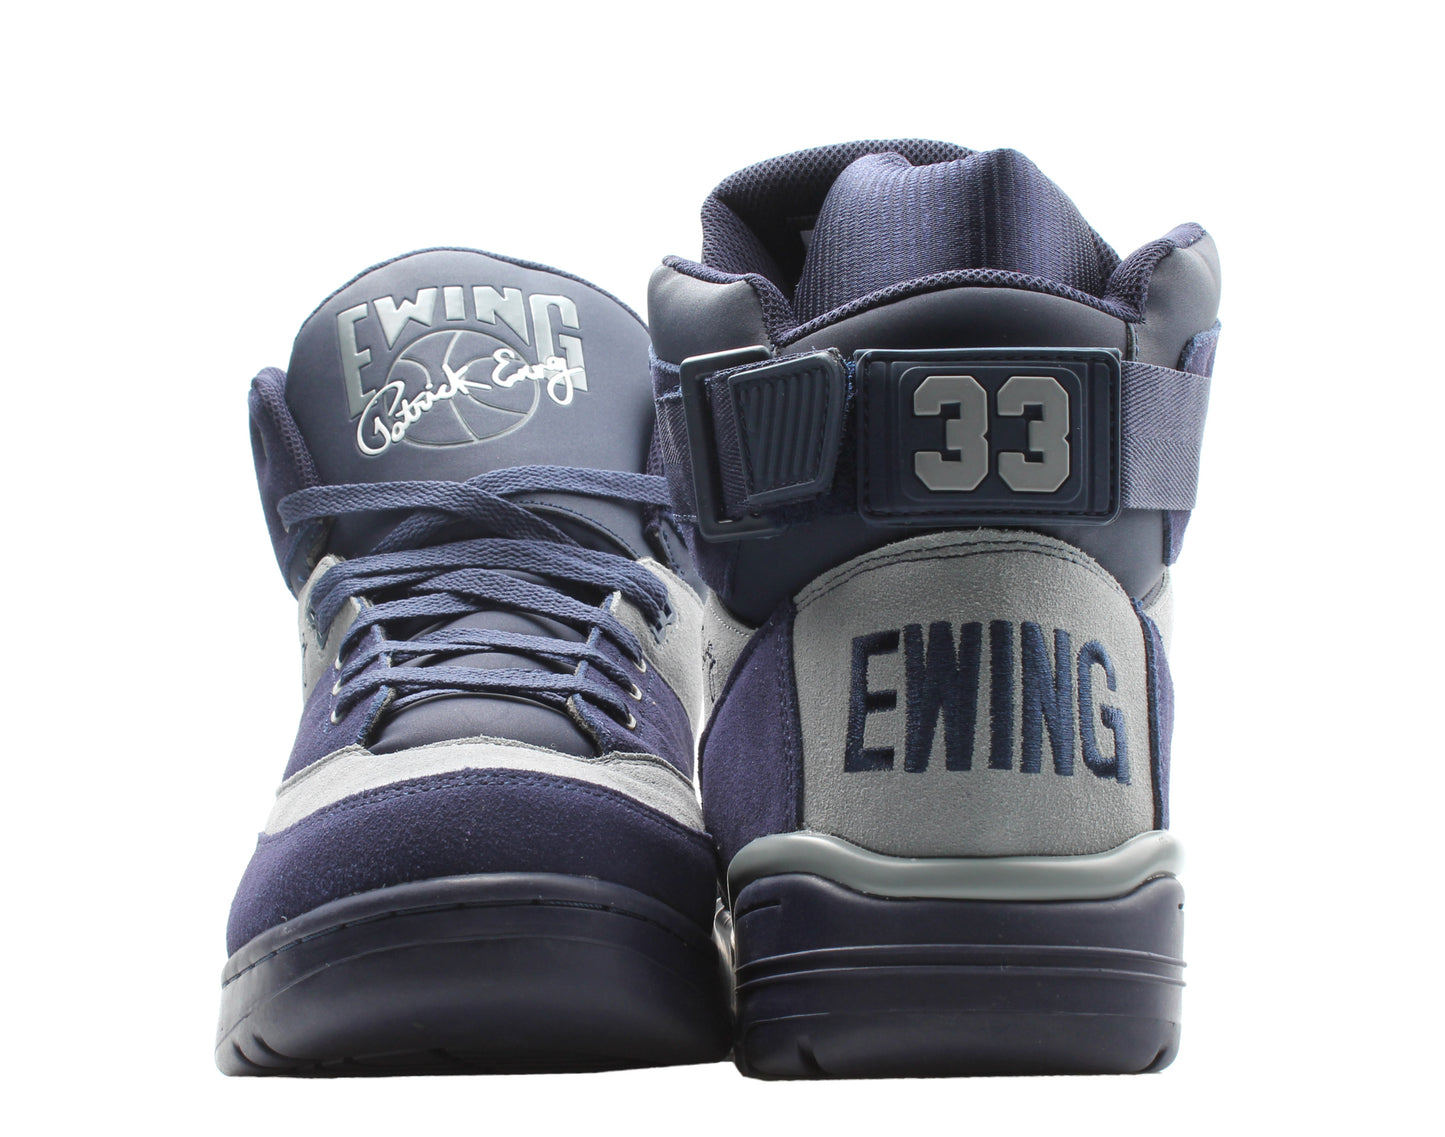 Ewing Athletics Ewing 33 Hi DC OG Men's Basketball Shoes